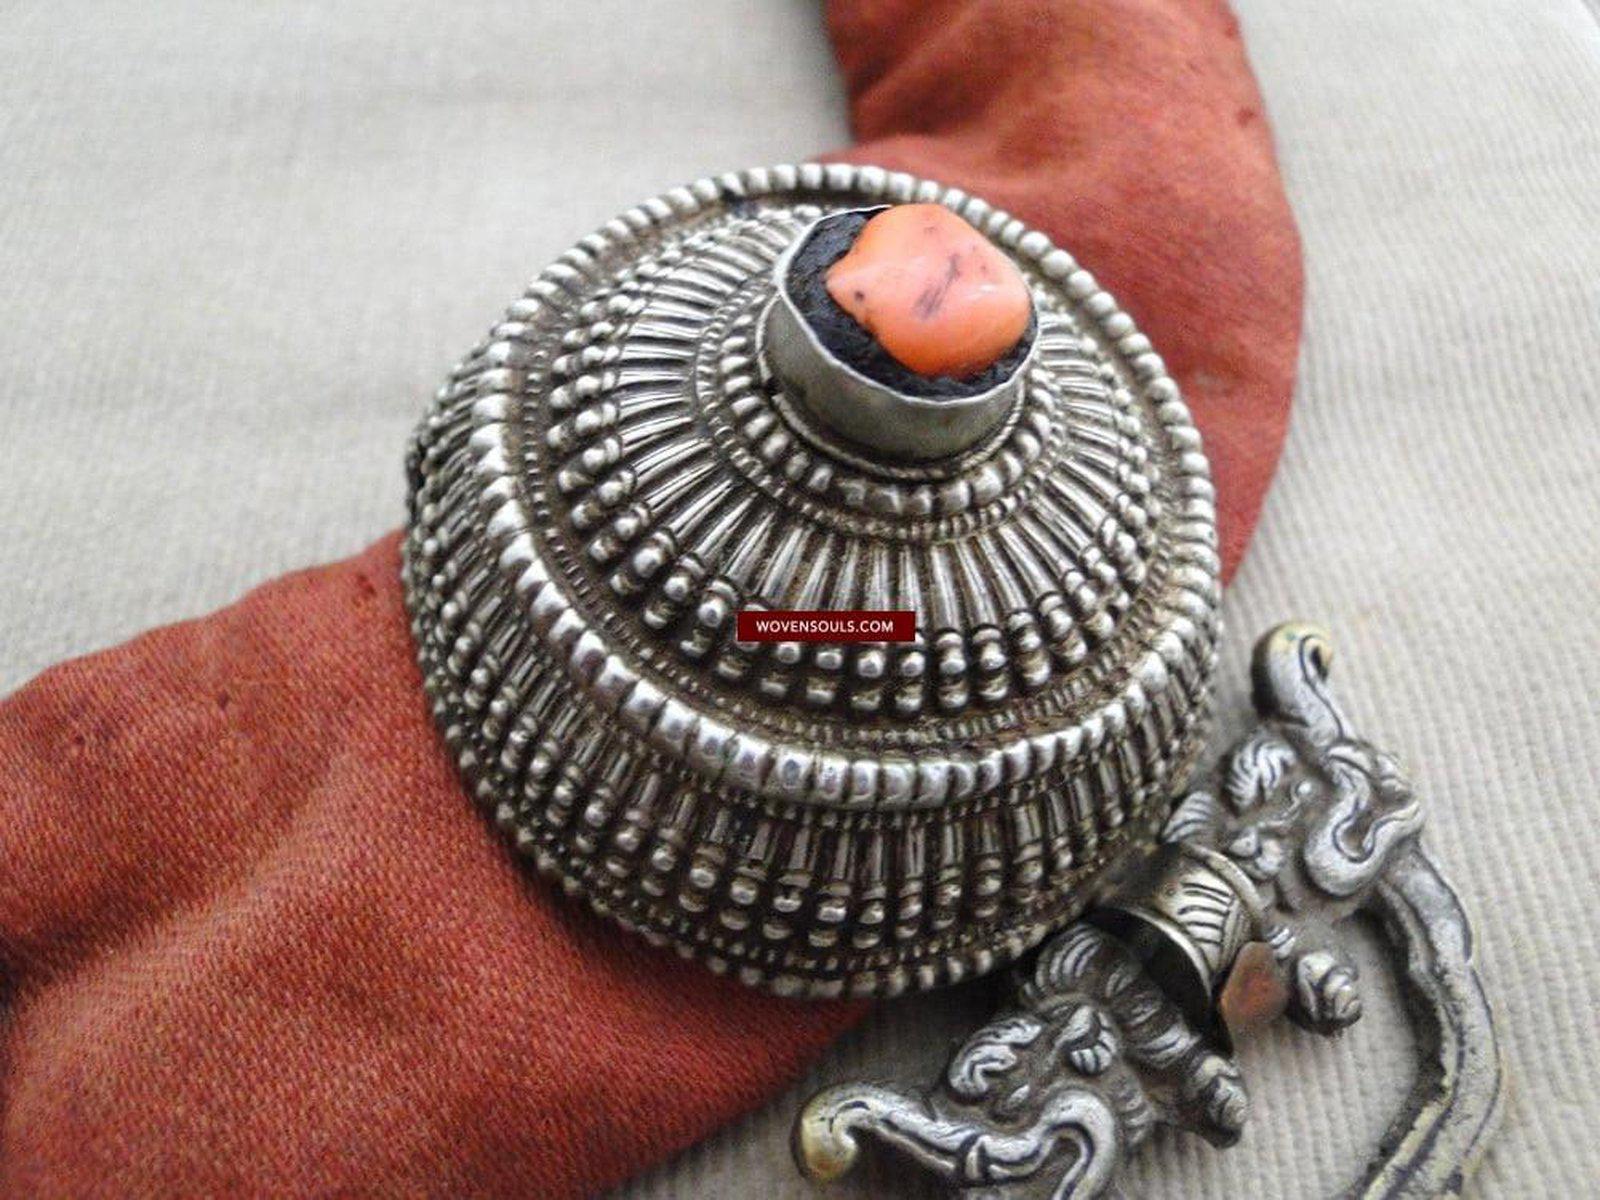 401 SOLD Vintage Tibetan Sash with Ornaments - WOVENSOULS Antique 